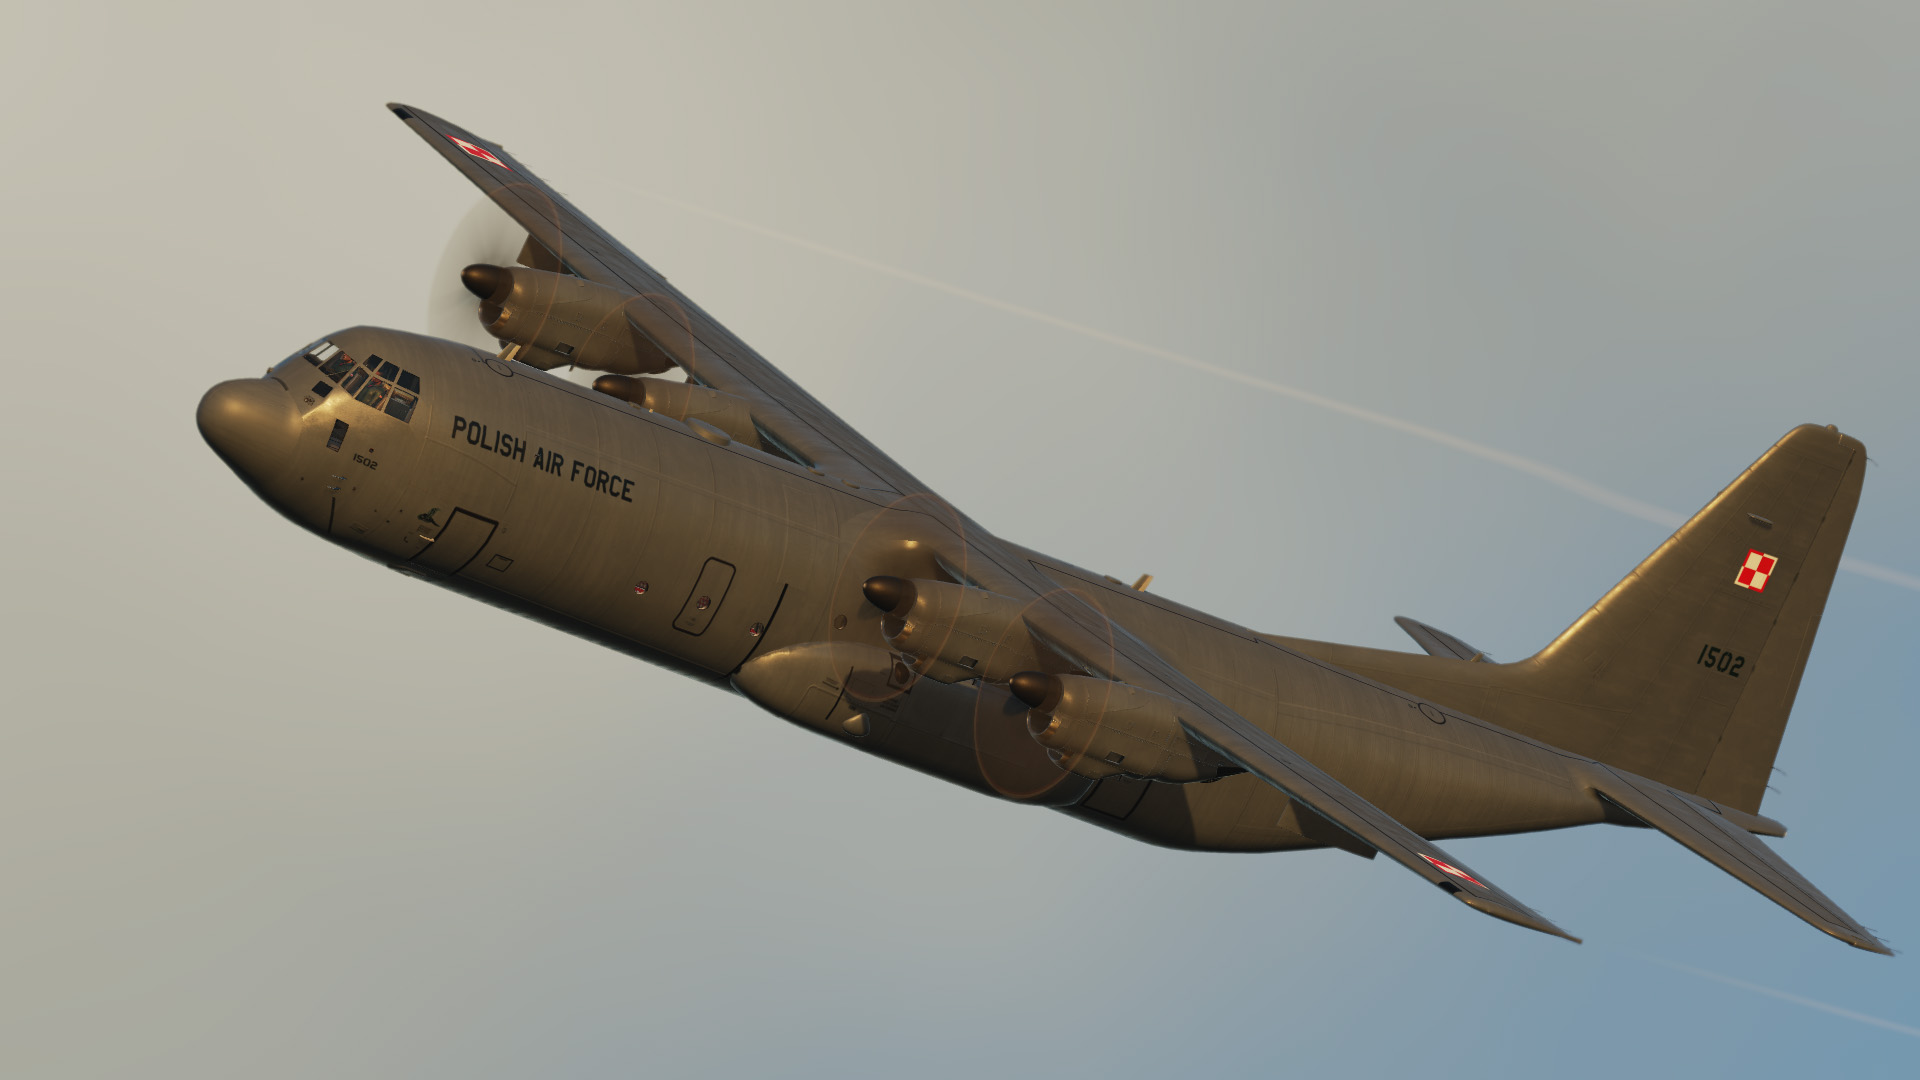 C-130J-30 Polish Air Force - HiRes Texturepack